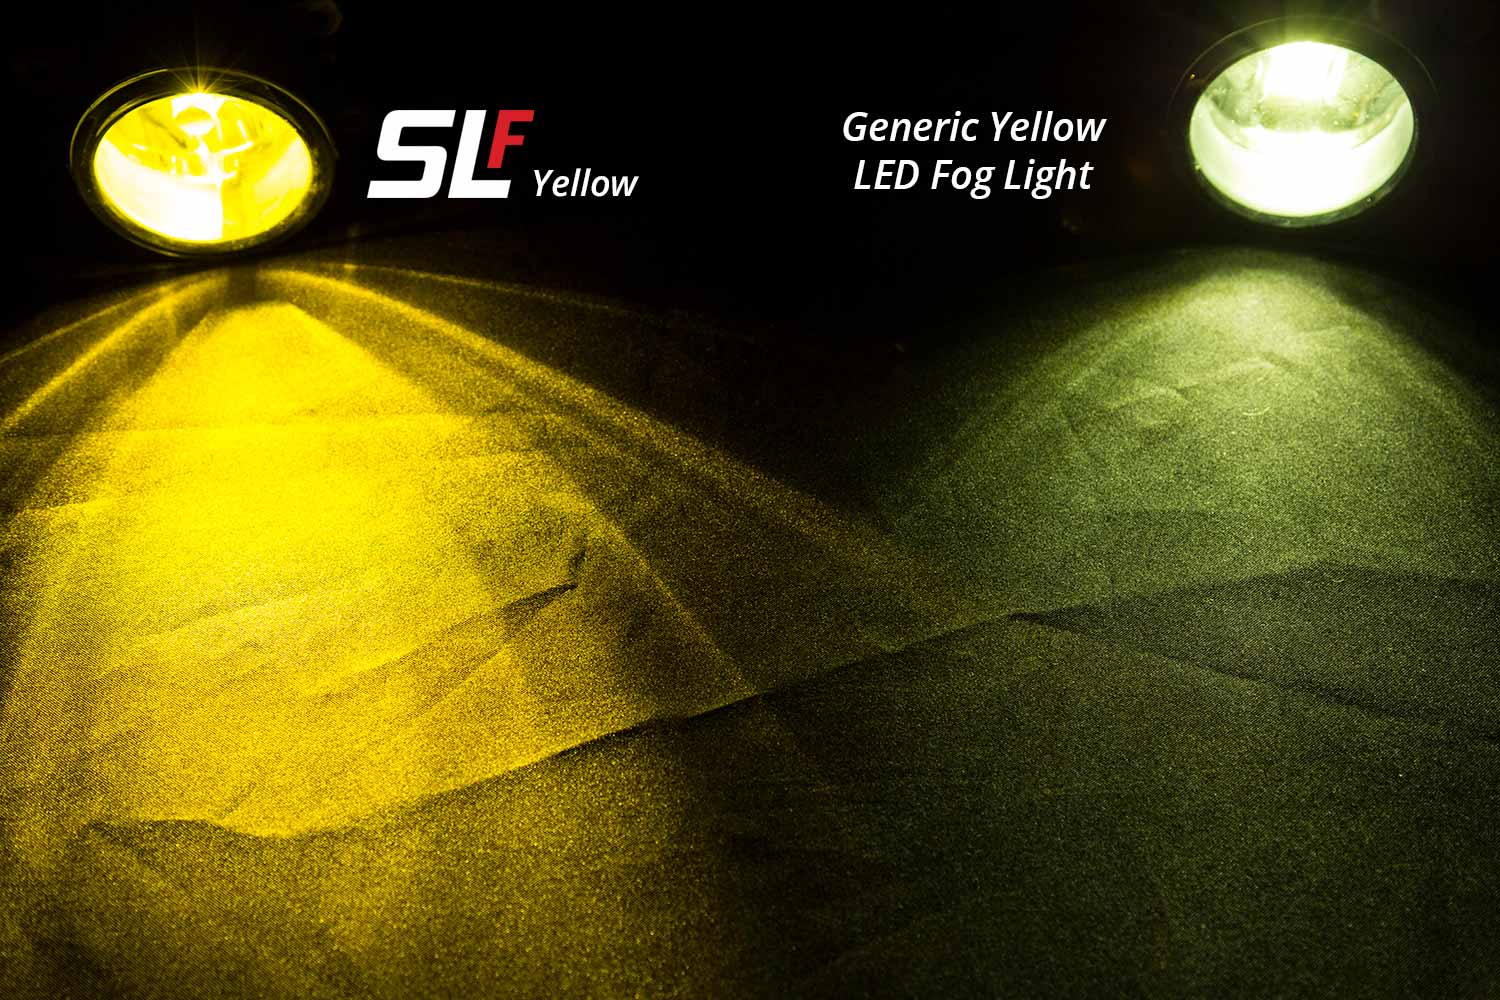 9006 SLF LED Bulb Yellow Pair Diode Dynamics